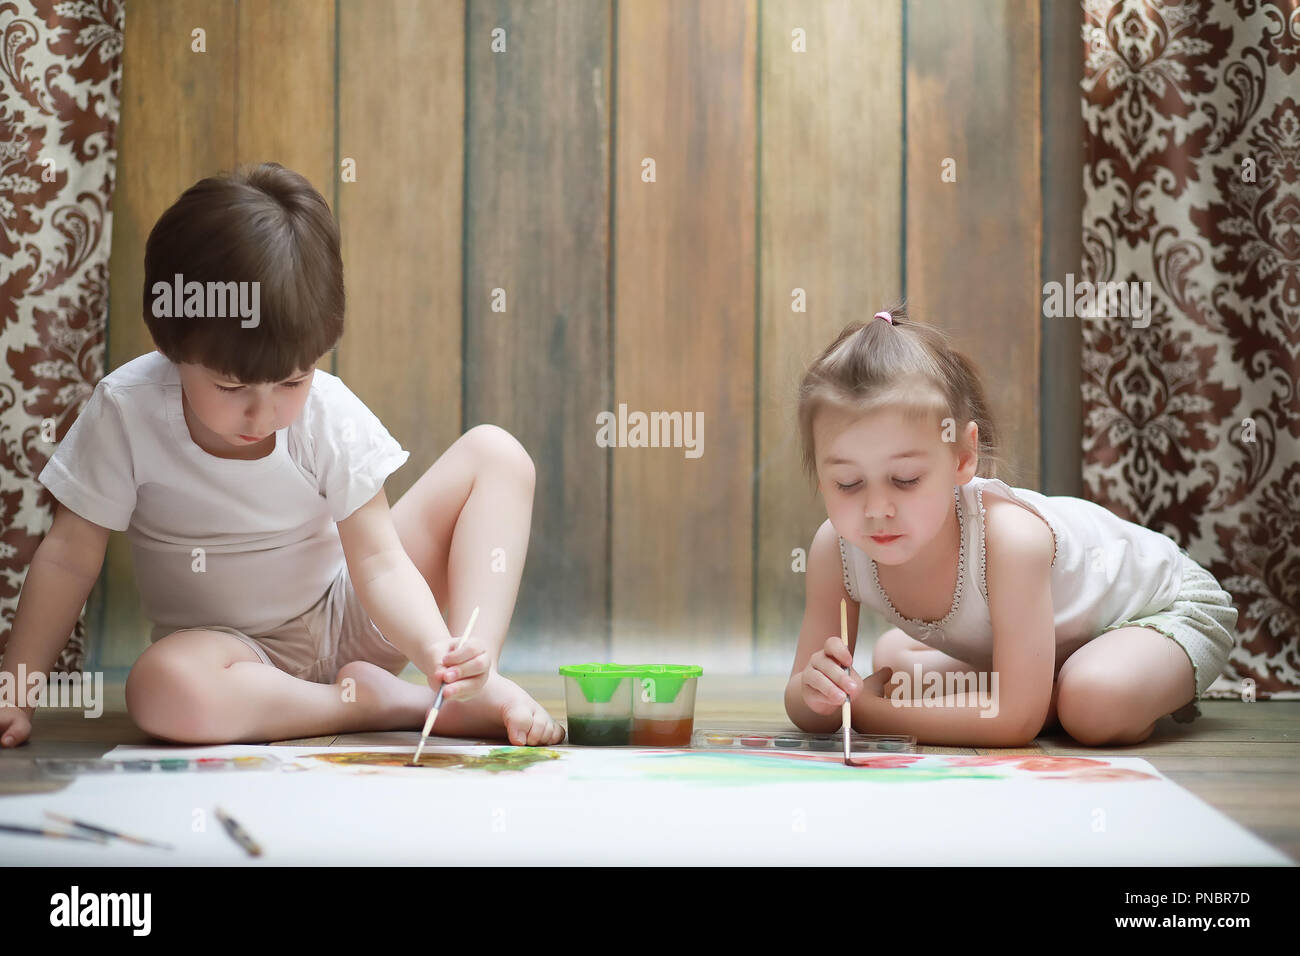 https://c8.alamy.com/comp/PNBR7D/little-children-paint-on-a-large-sheet-of-paper-PNBR7D.jpg